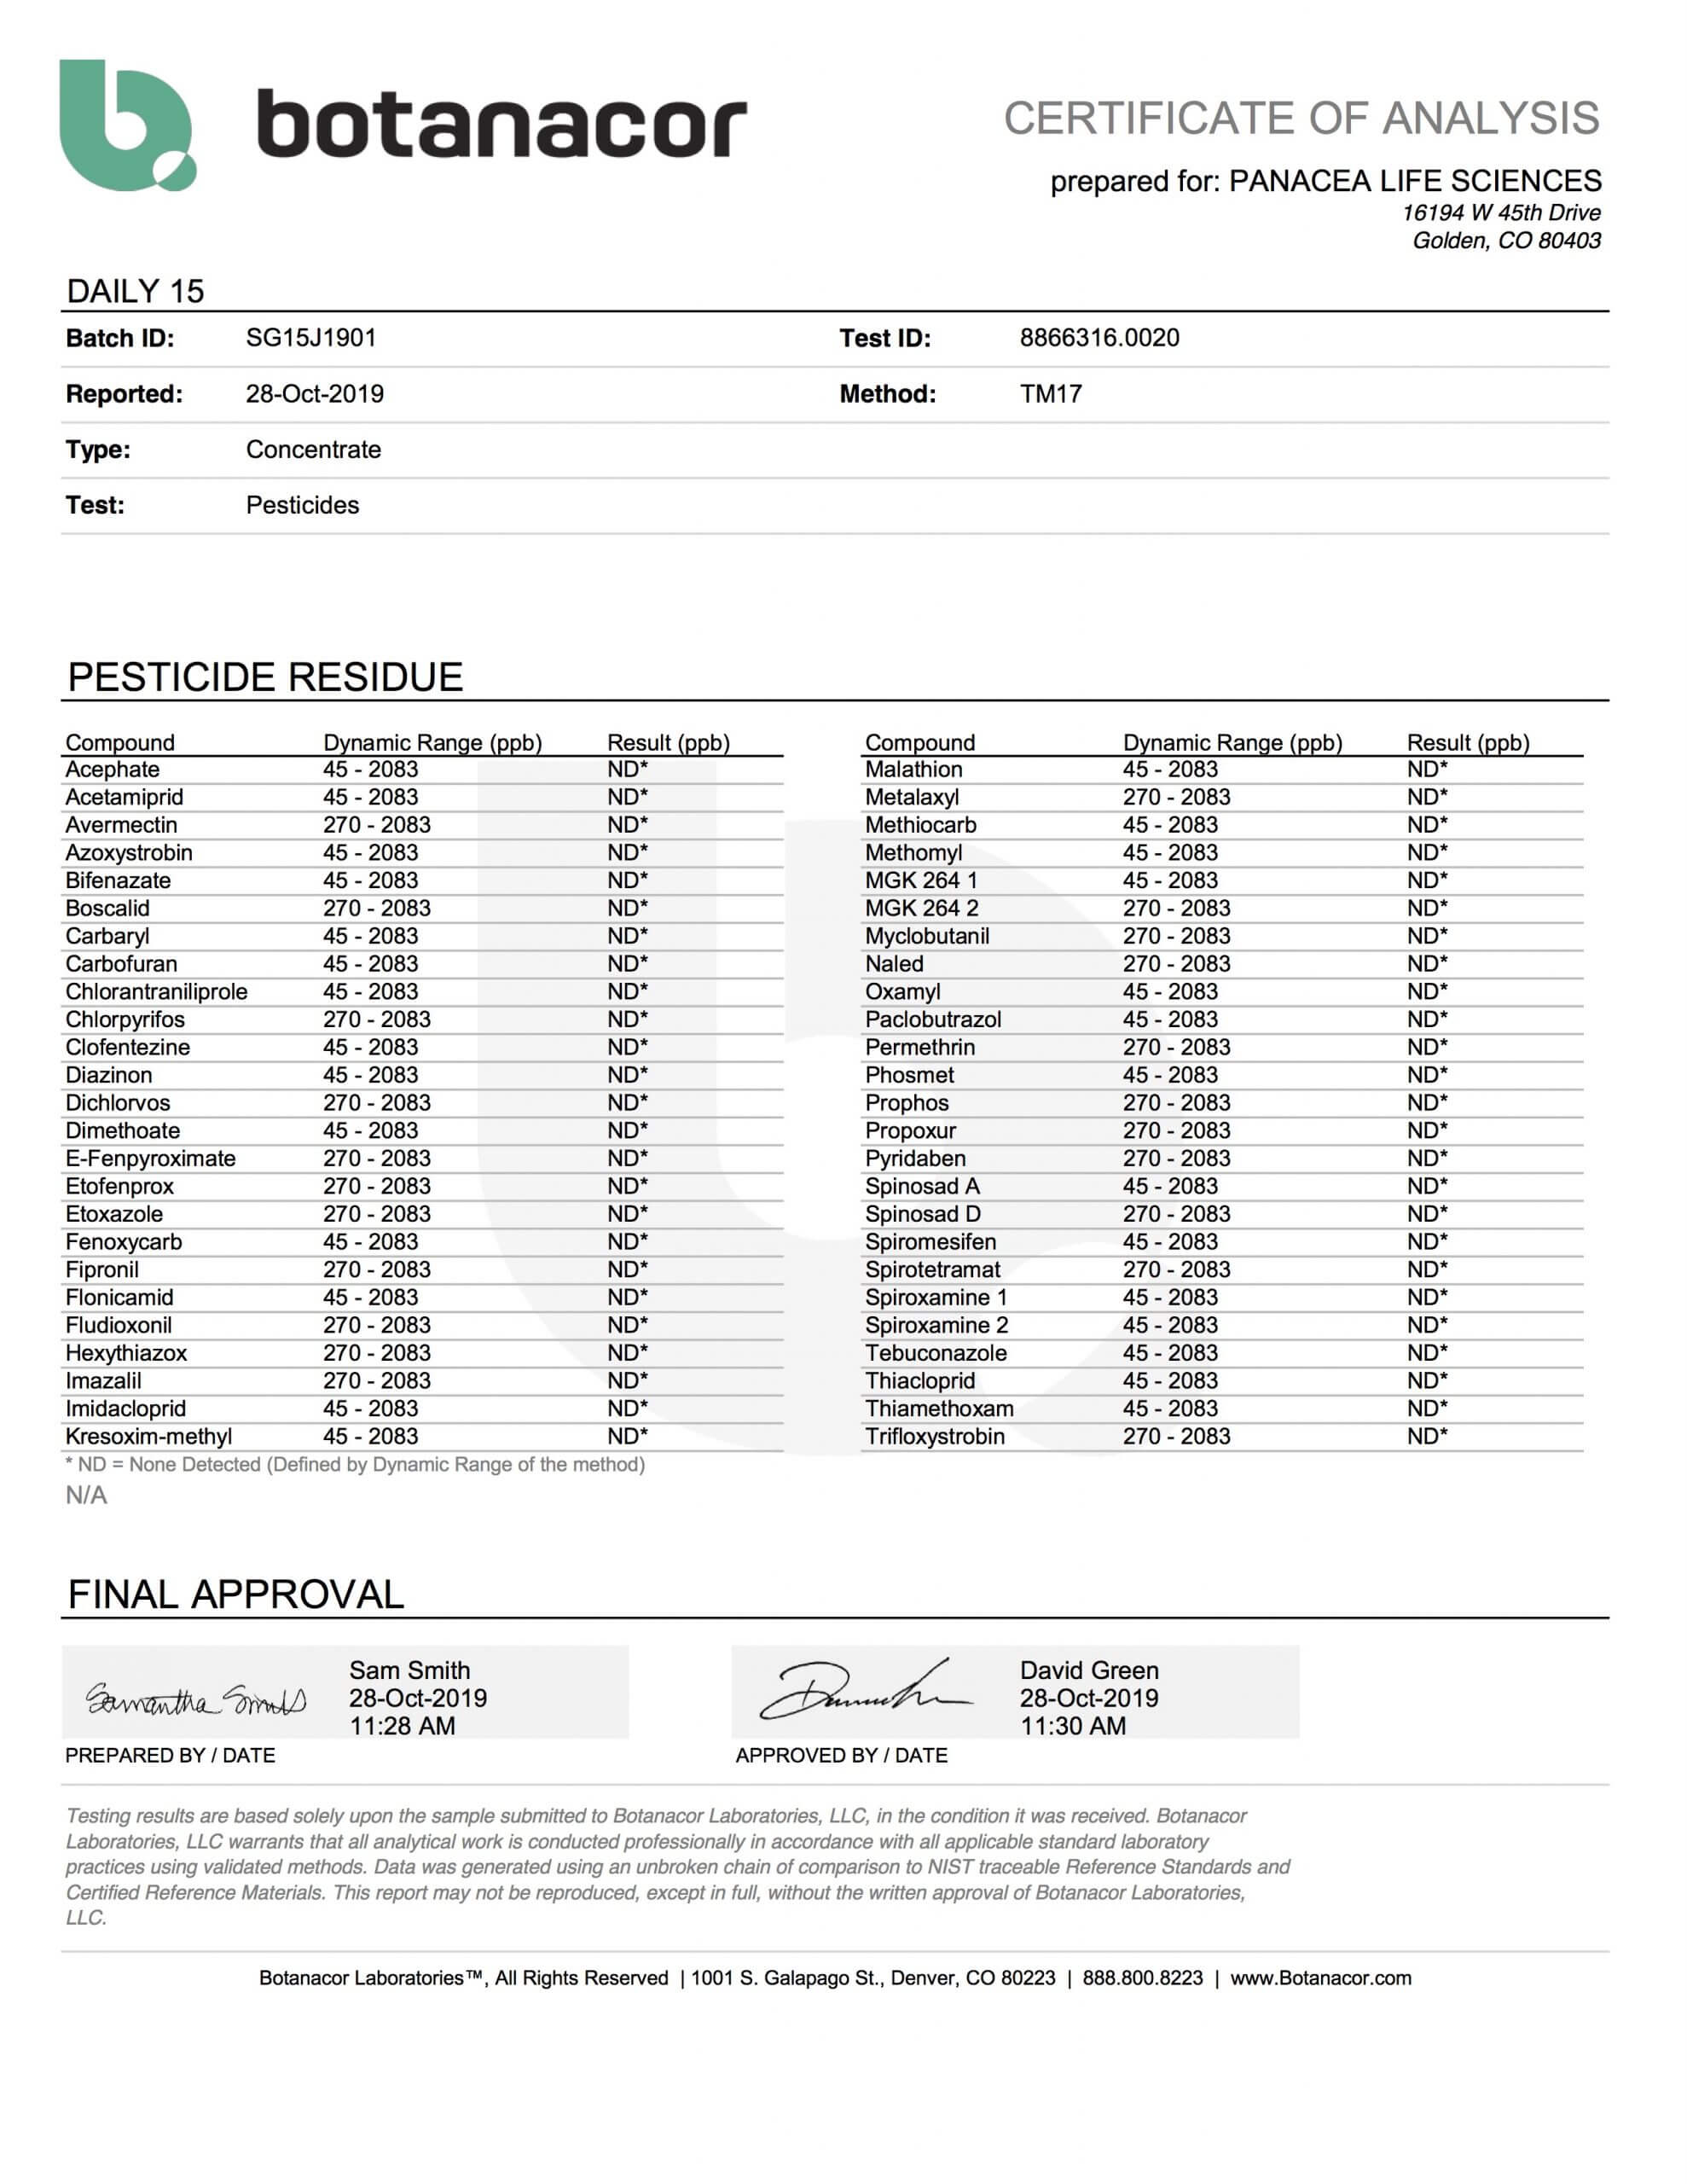 Panacea Test Results Batch SG15J1901